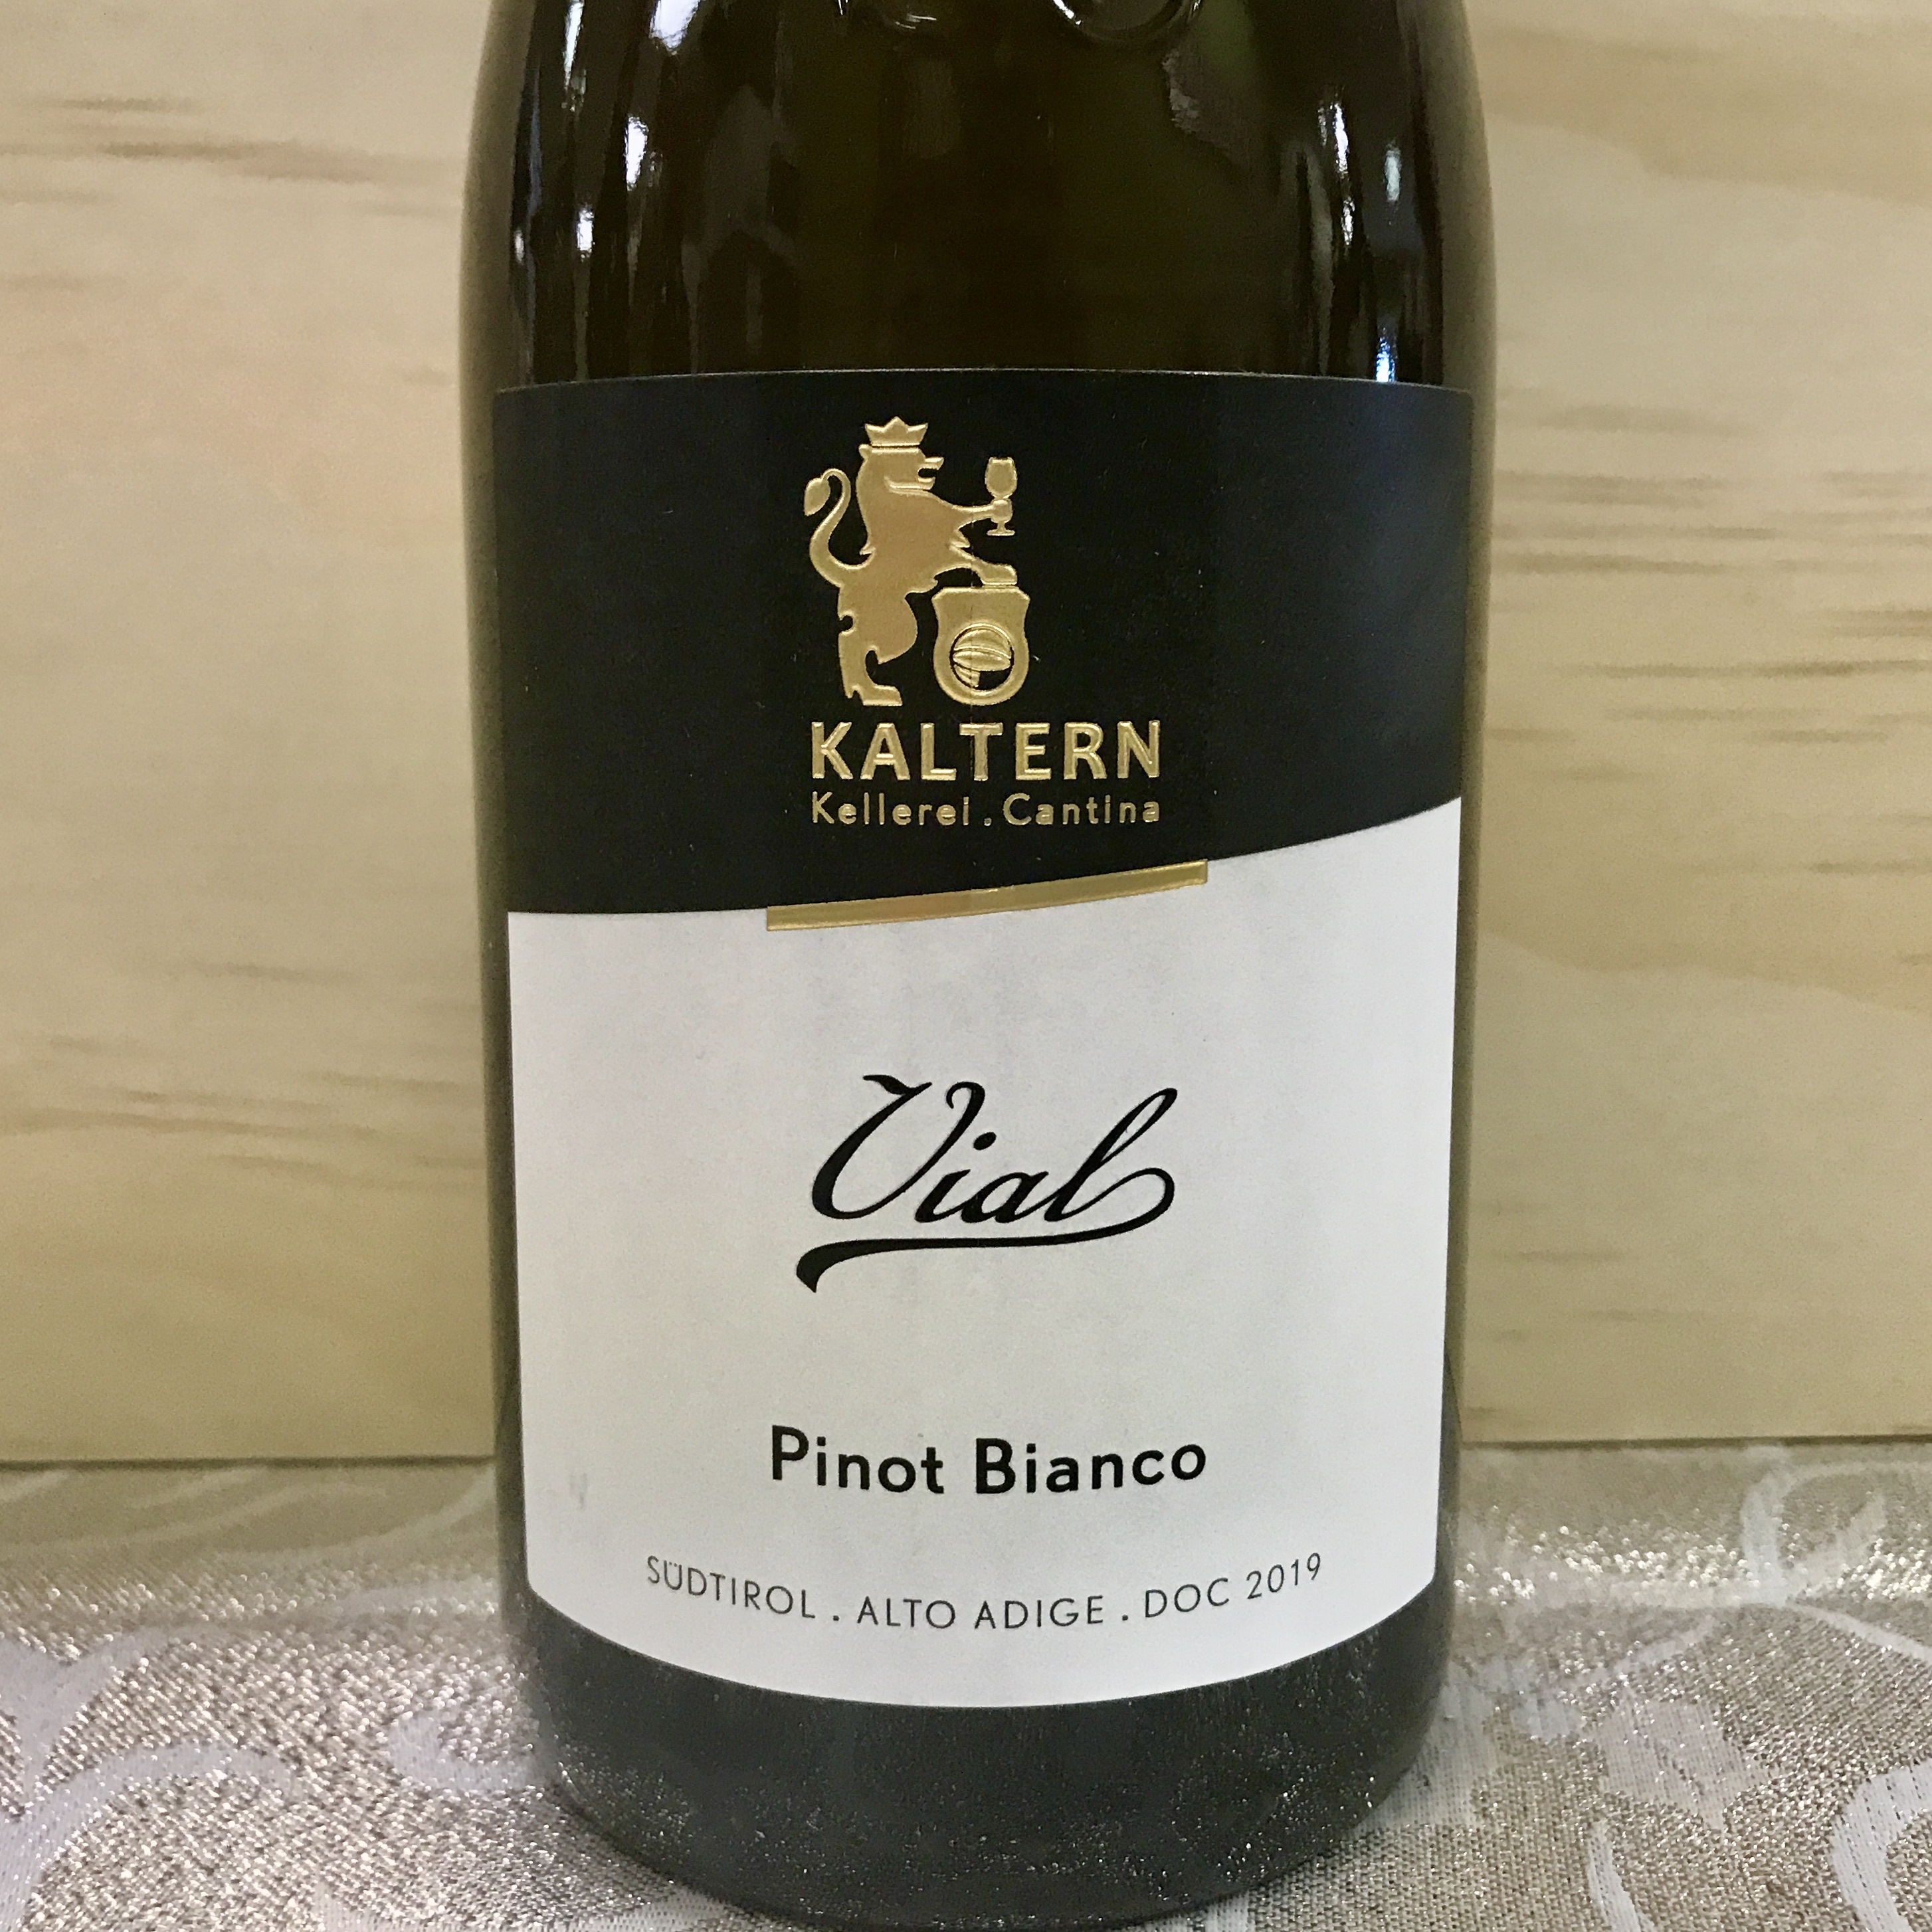 Kellerei Kaltern Vial Pinot Bianco 2019